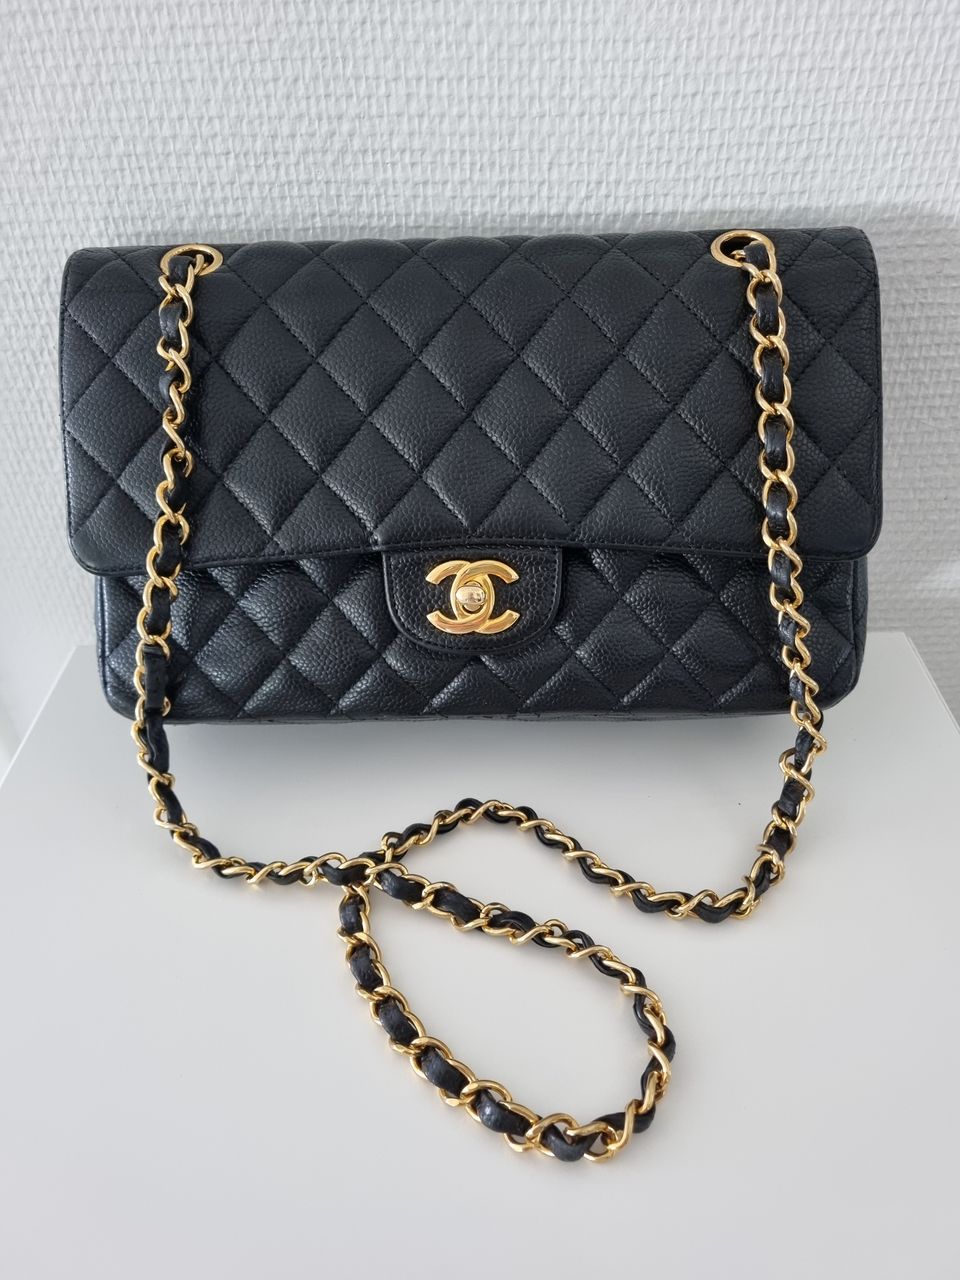 Chanel medium double flap bag